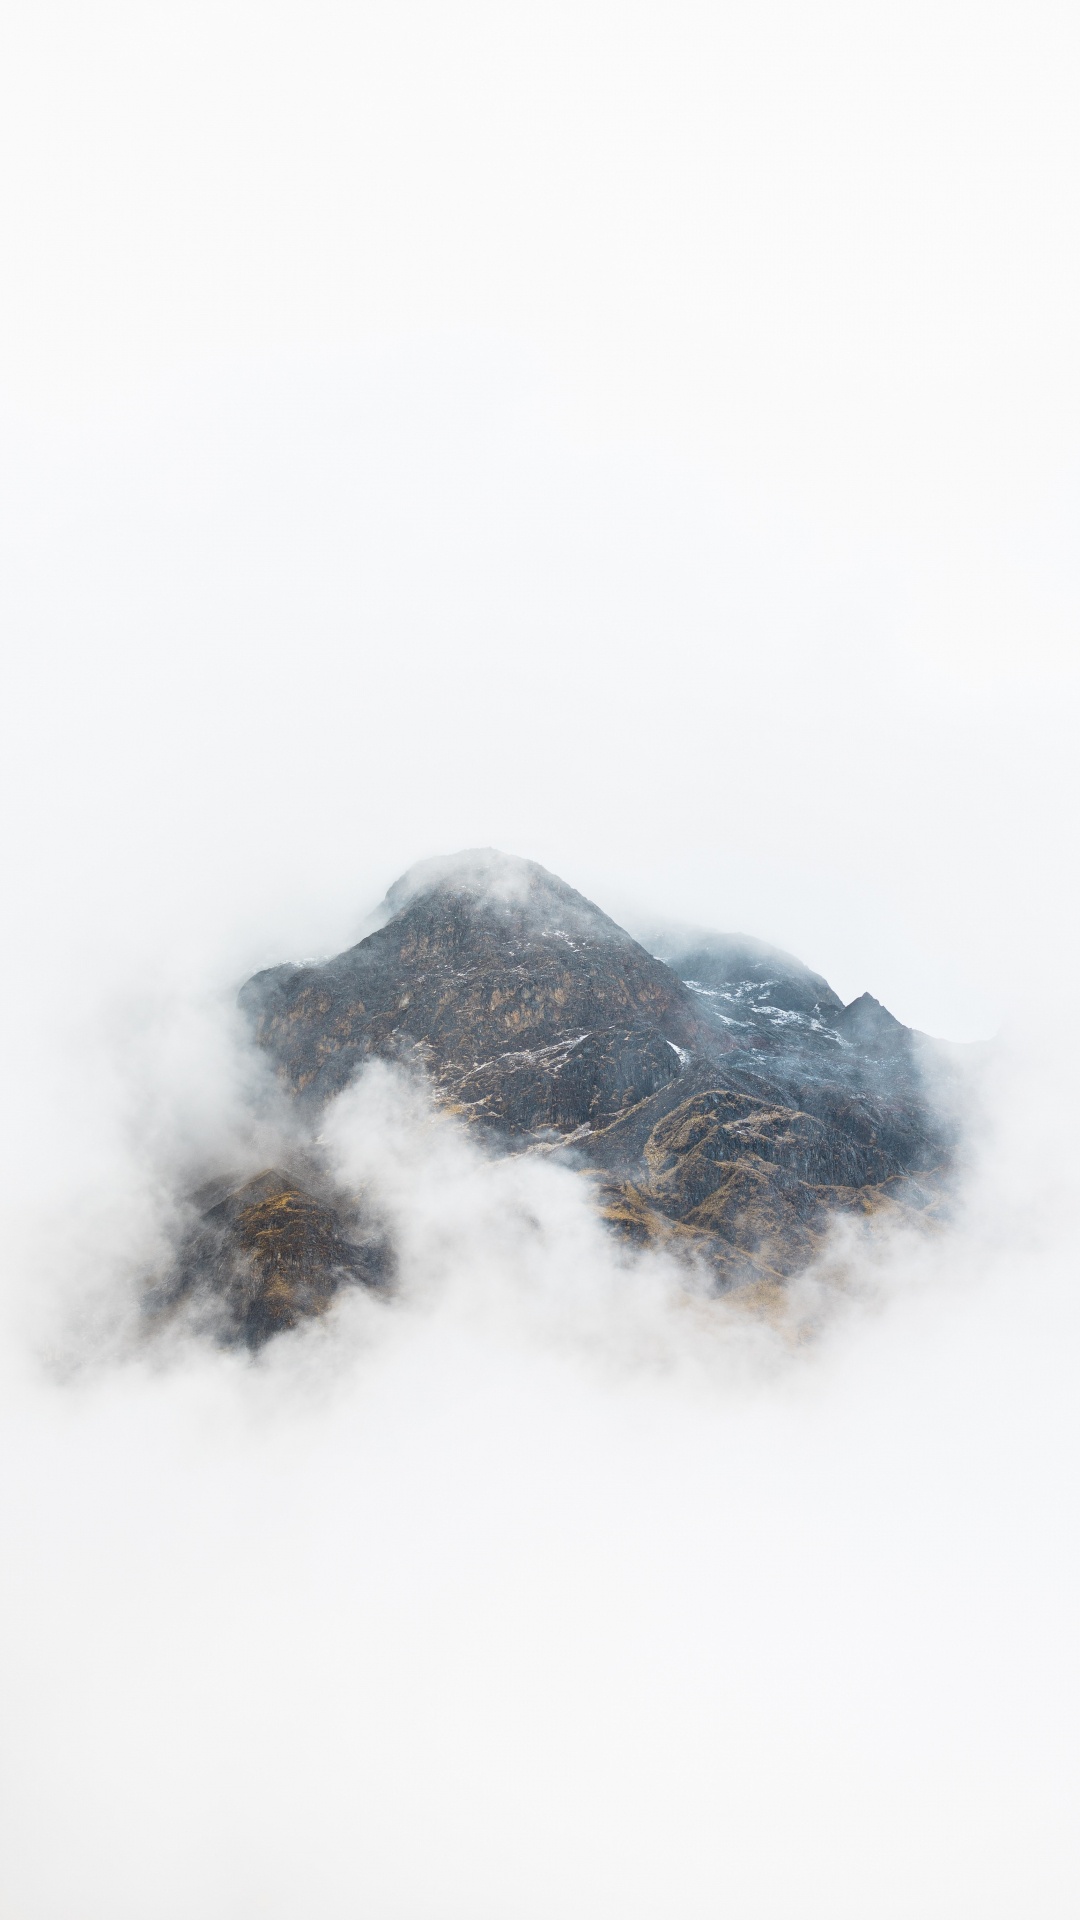 Neige, Rock, Brouillard, Hiver, Tempête de L'hiver. Wallpaper in 1080x1920 Resolution